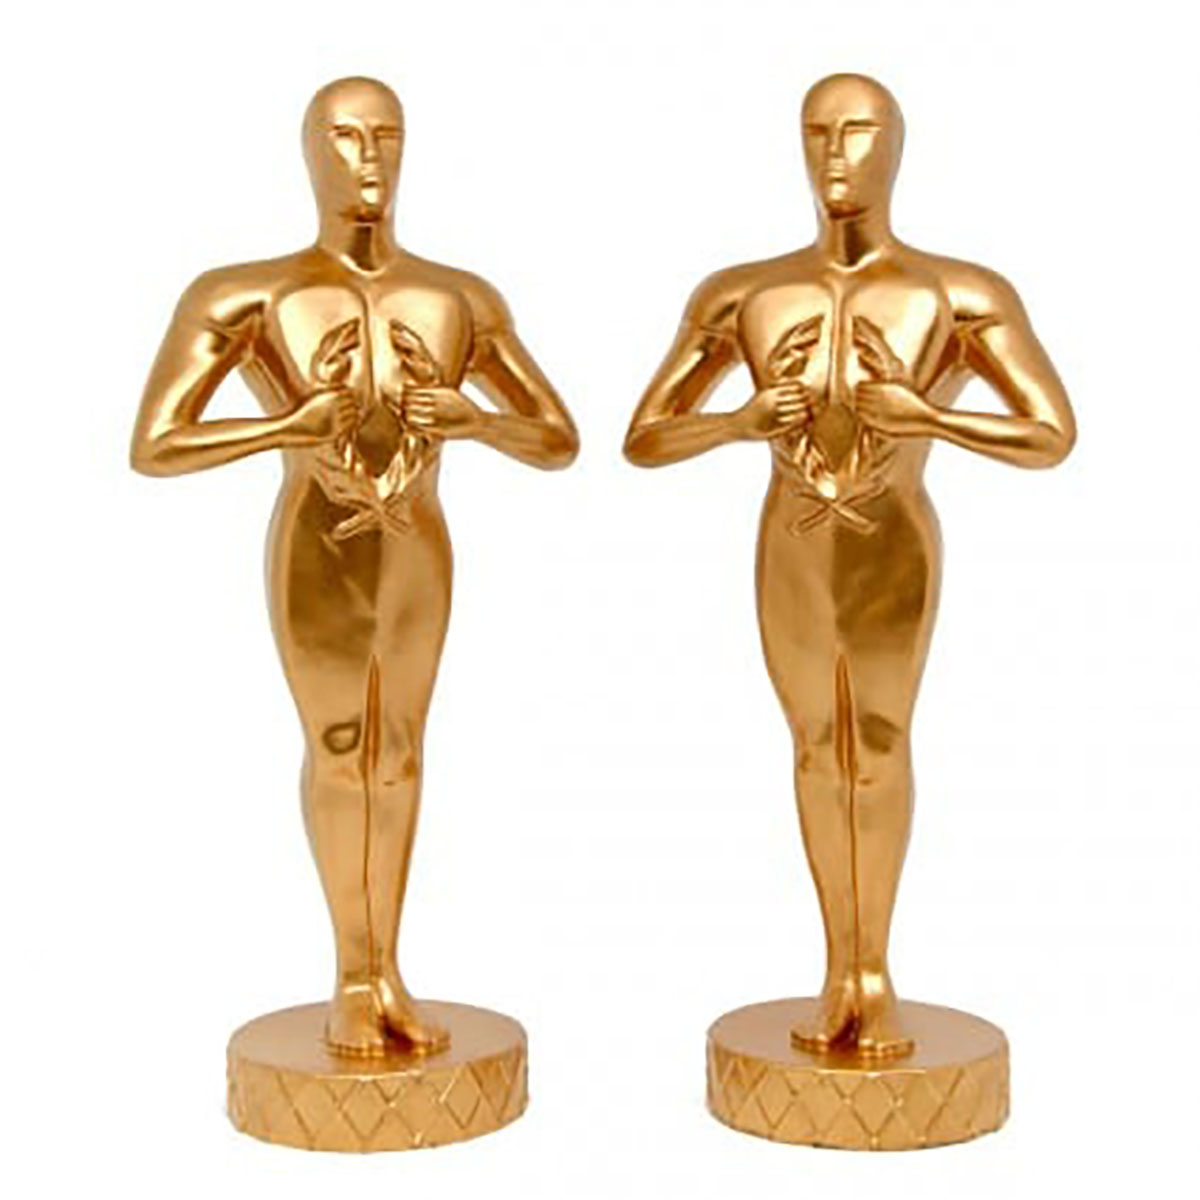 Award Statues